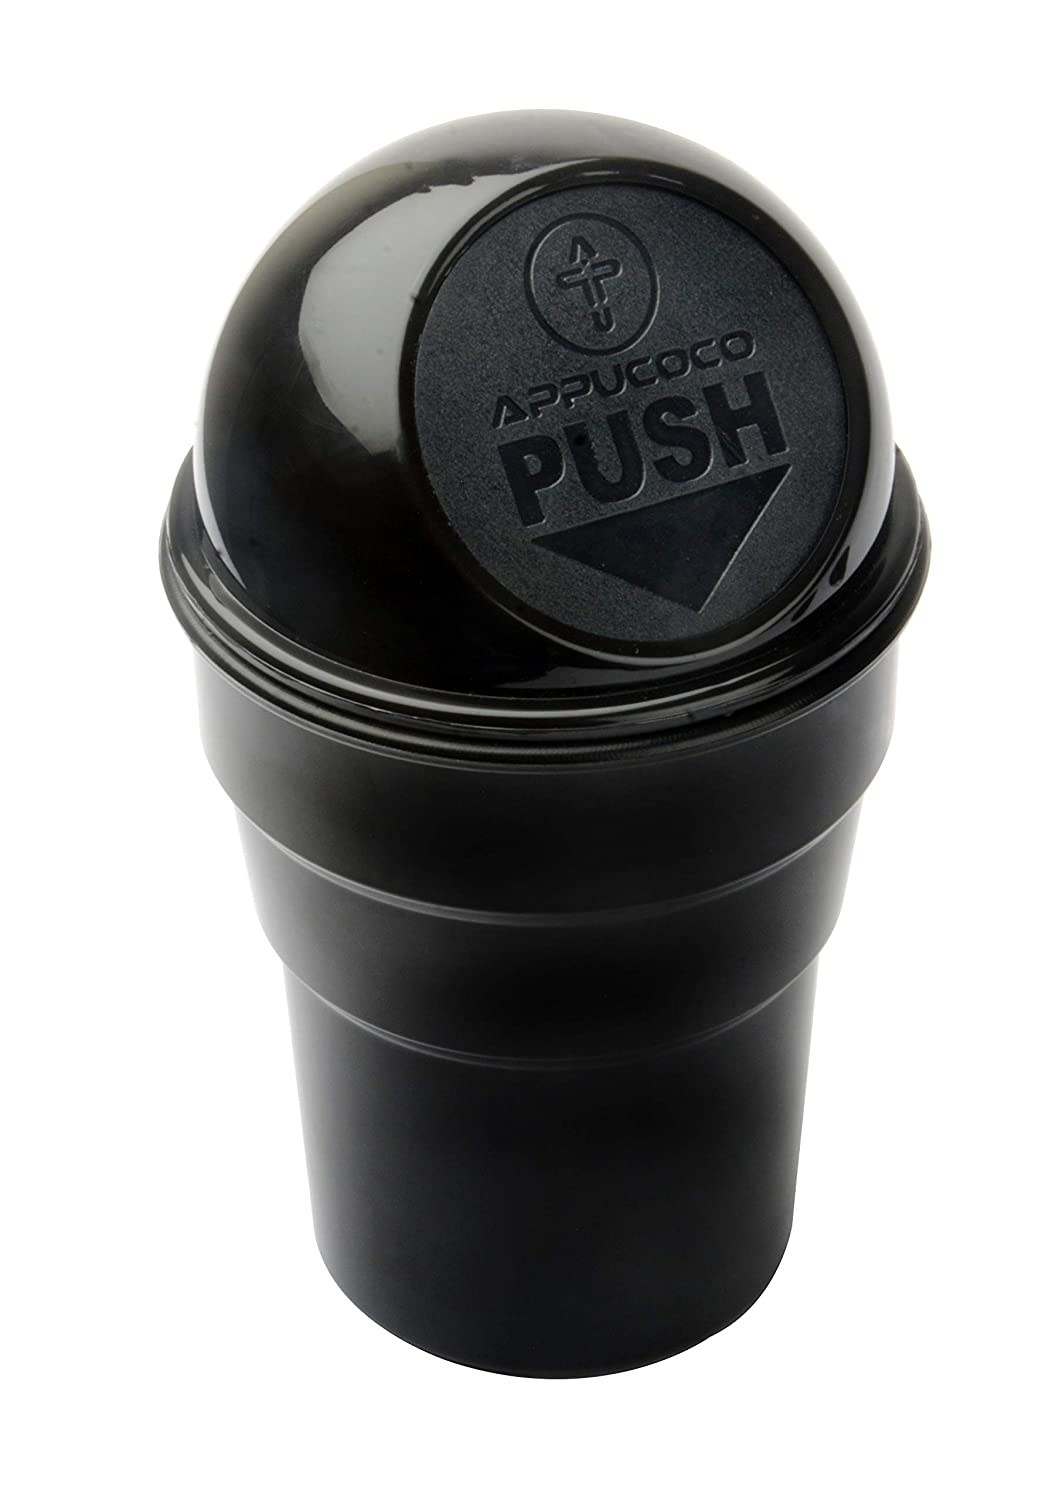 A black mini trash can 